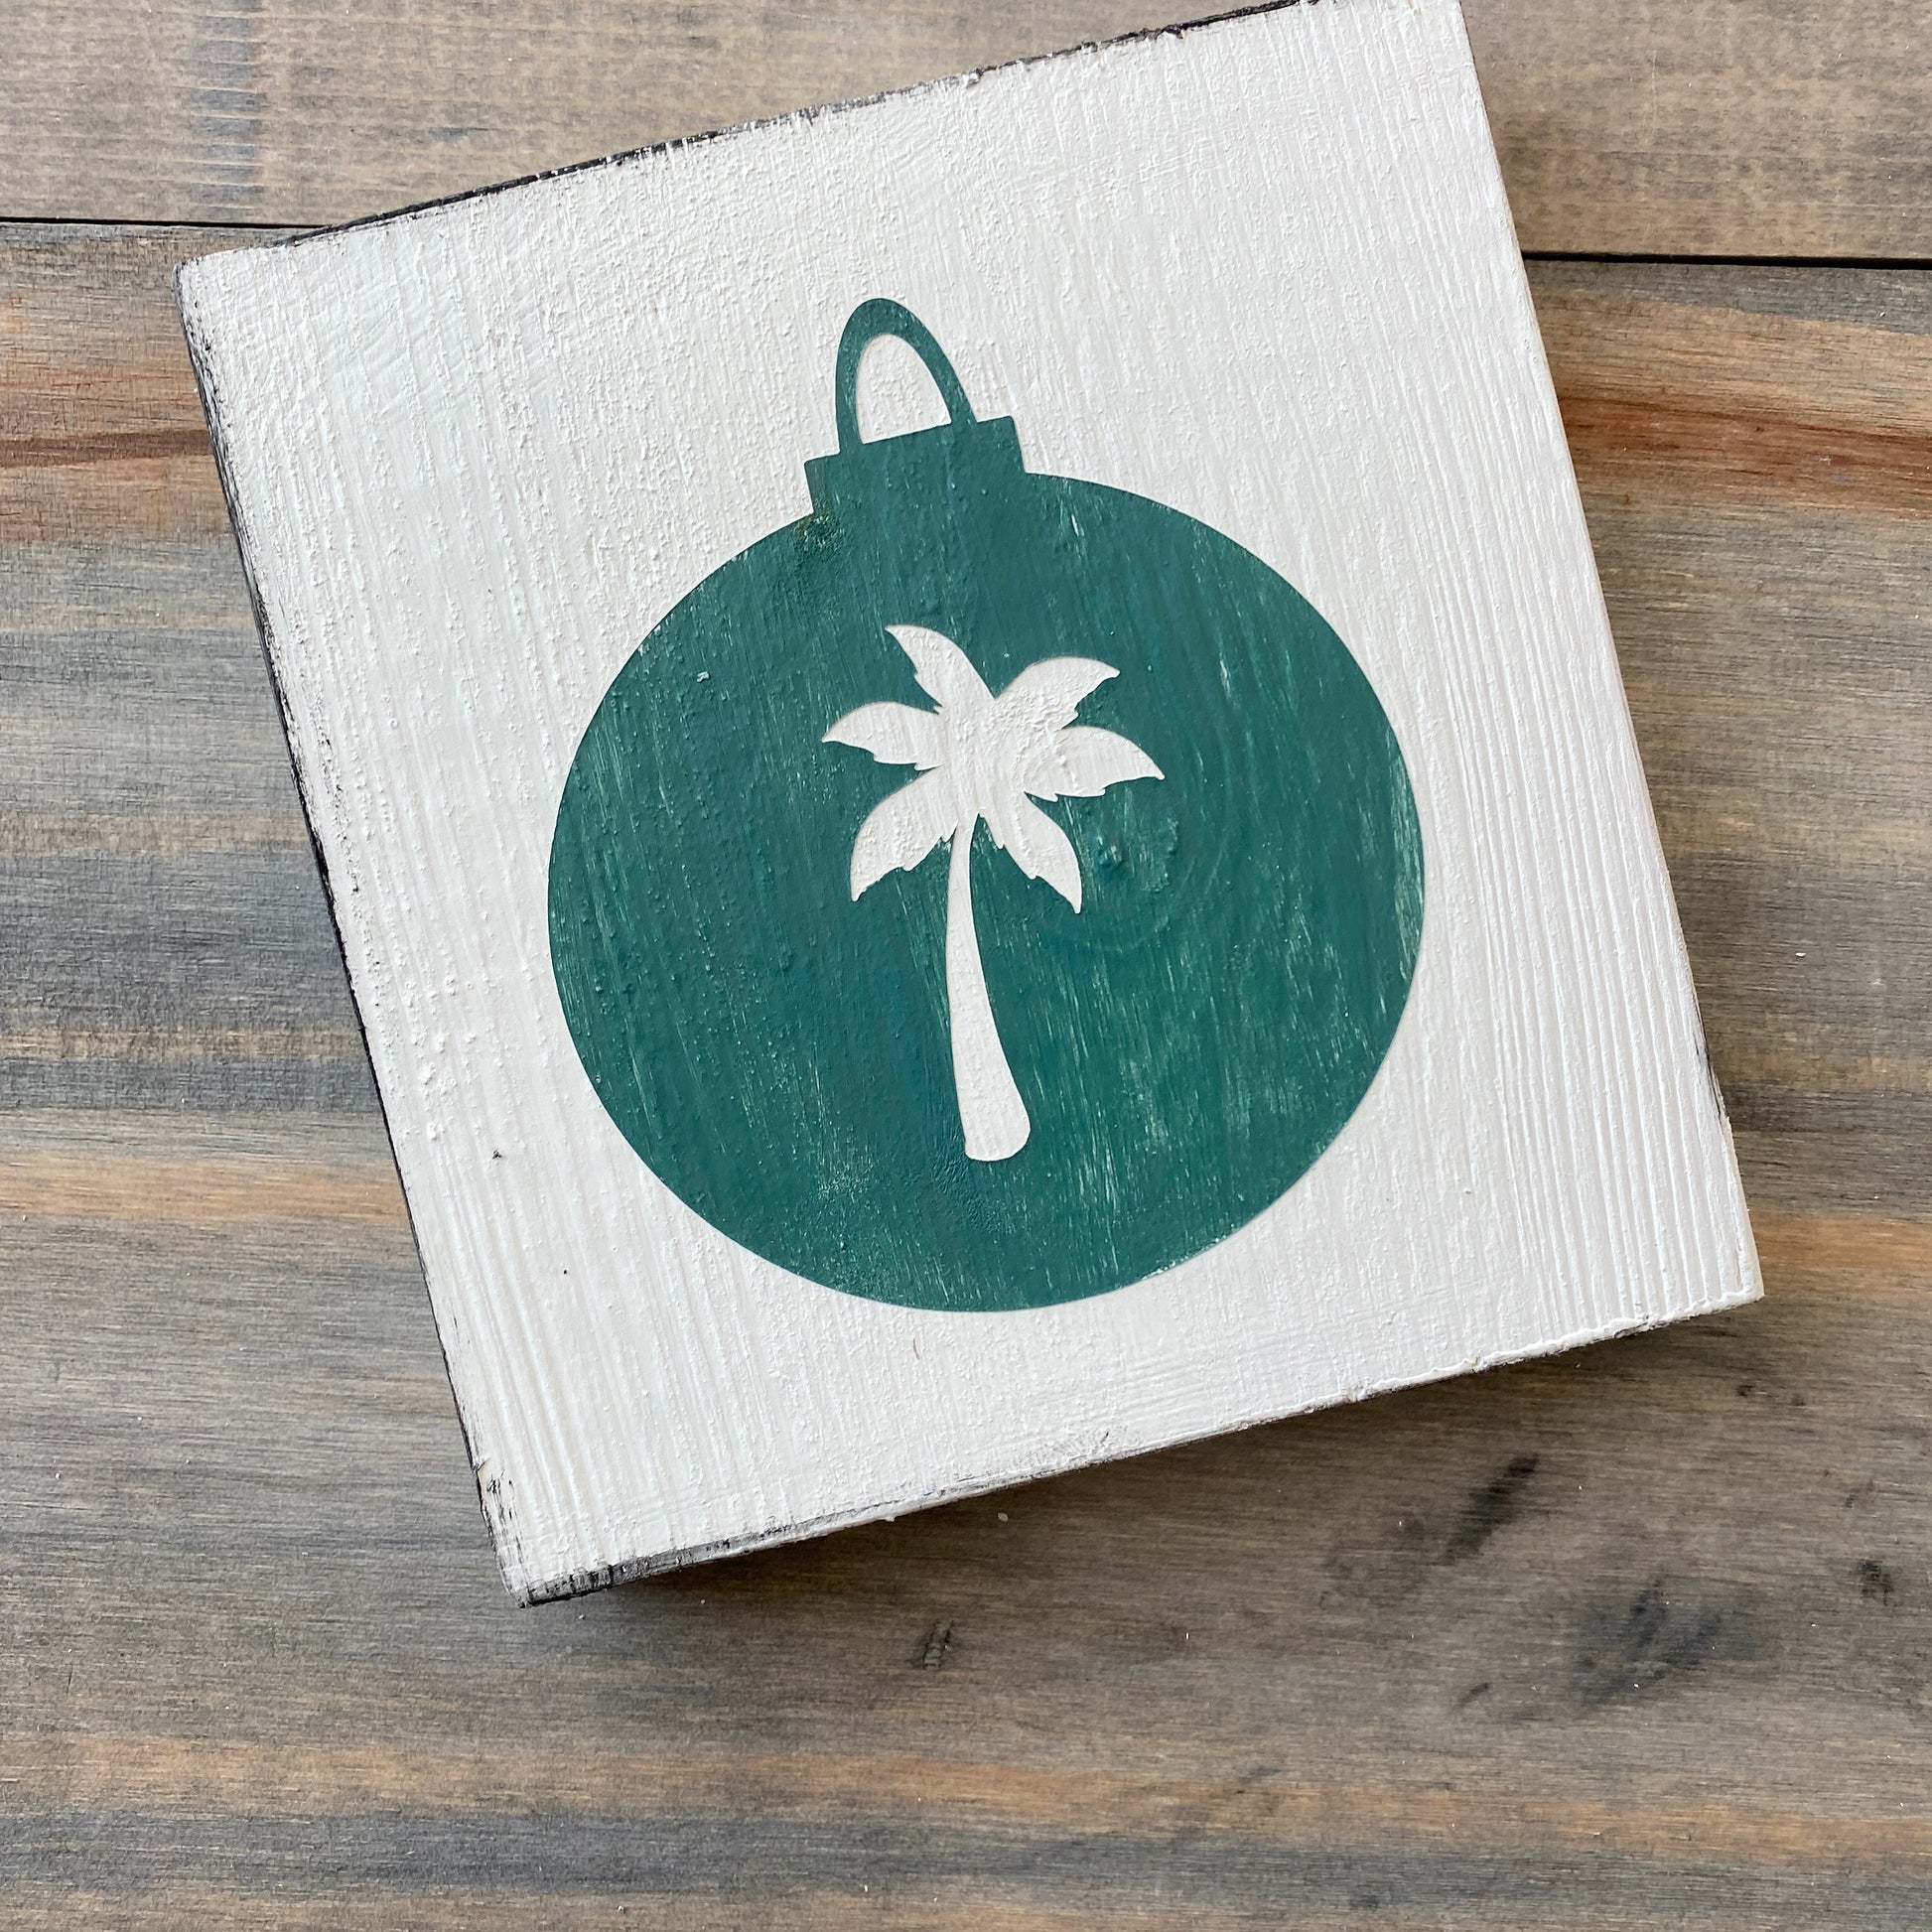 Coastal Christmas Decor, Anchored Soul Designs Palm Tree Ornament wood sign white background with dark green design, beach house holiday decor coastal design